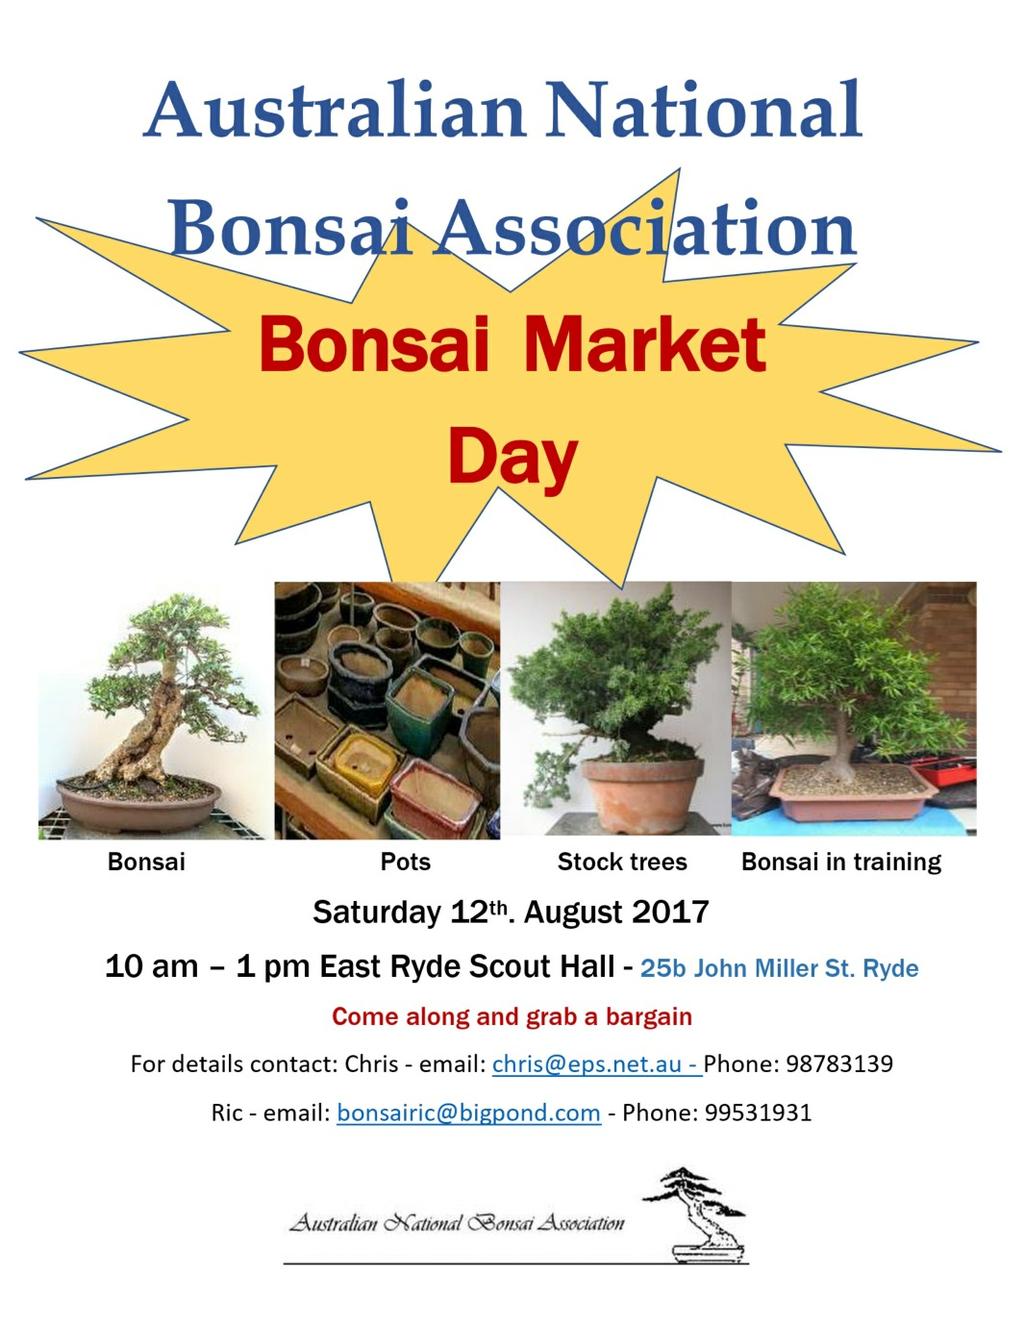 Bonsai Society of Sydney -www.